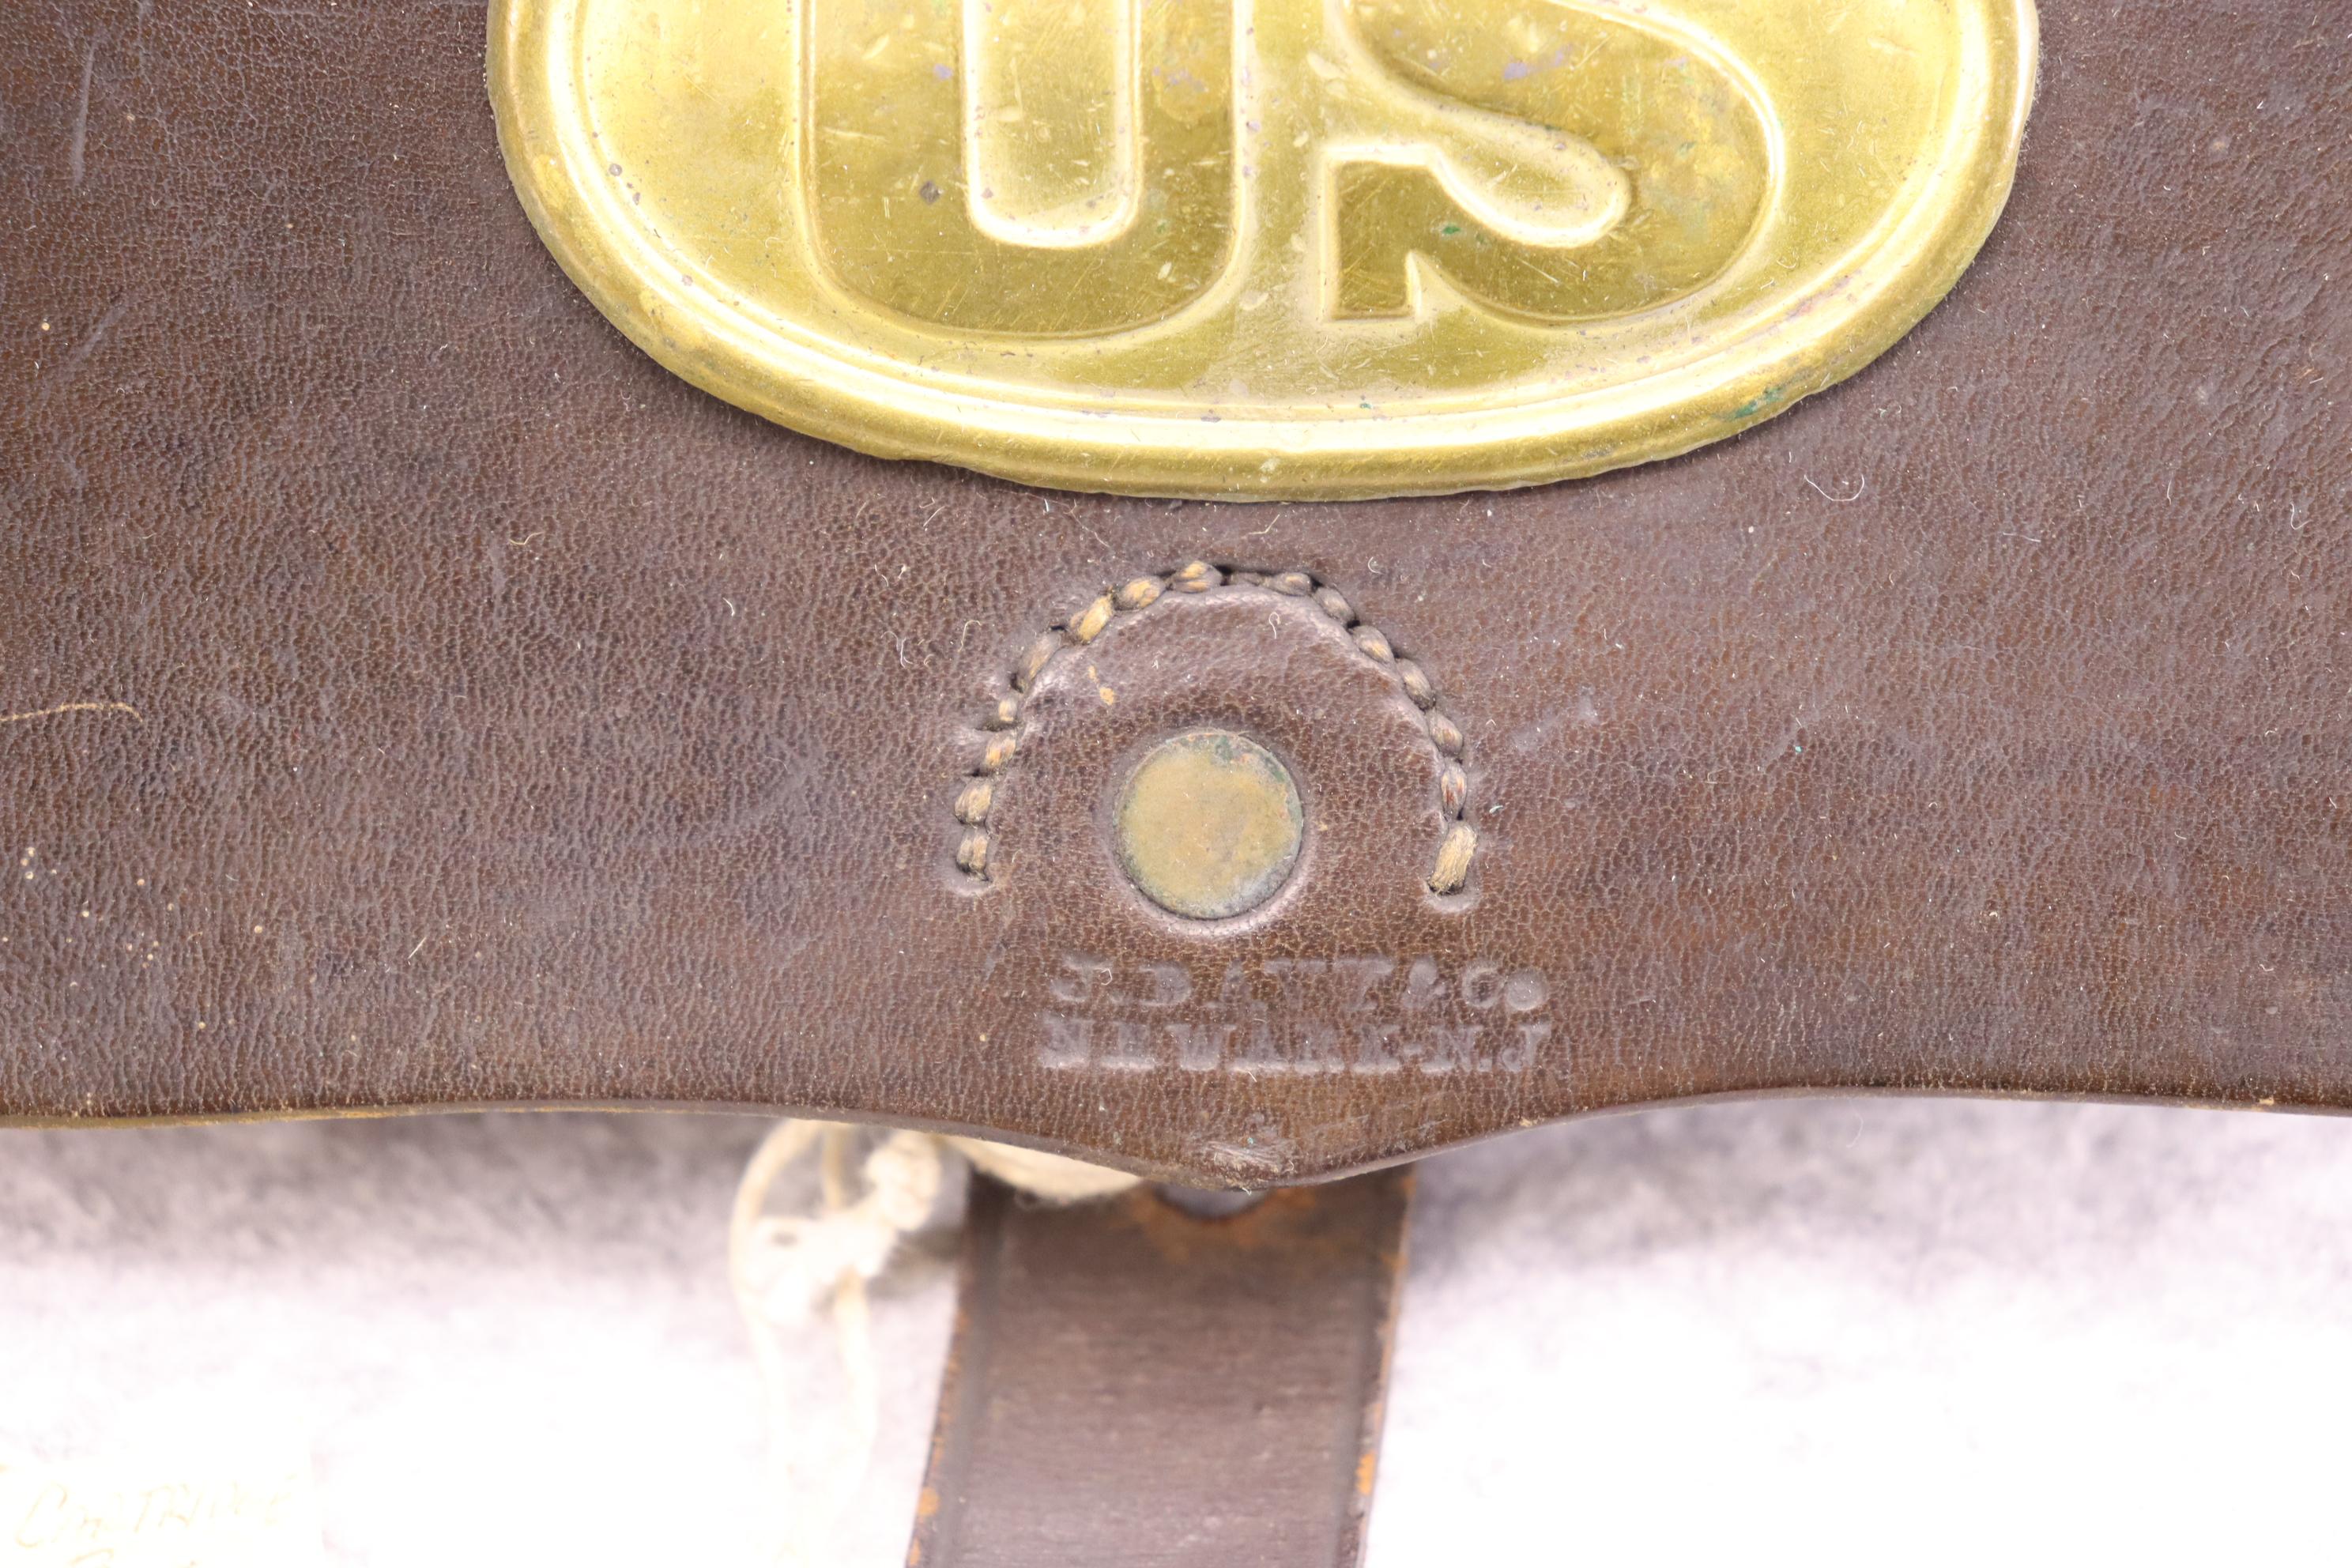 Civil War Federal Issue 44 Cal. Pistol Cartridge Box w/by J. Davis & Co. Newark, NJ.